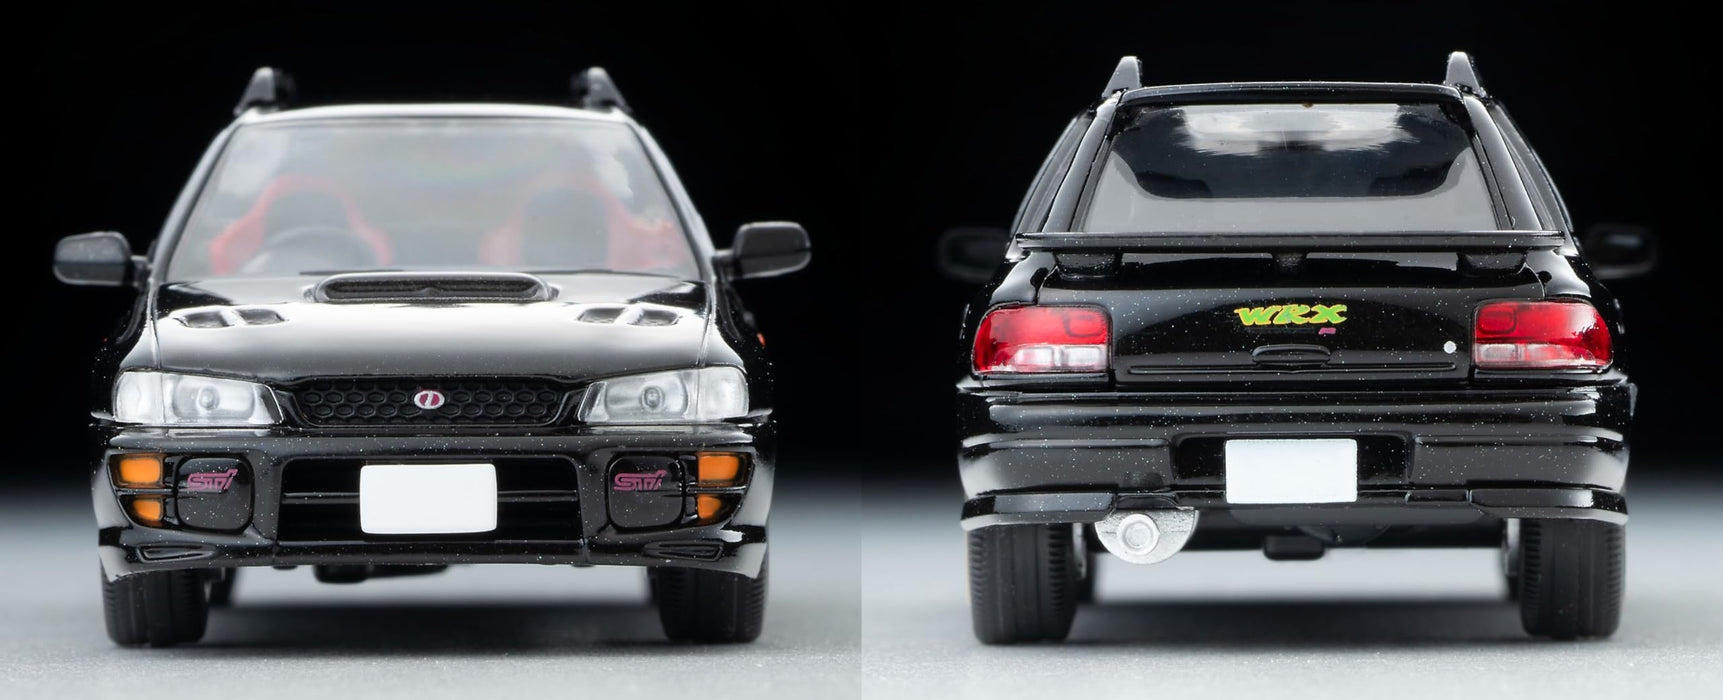 1/64 Scale Tomica Limited Vintage NEO TLV-N281d Subaru Impreza Pure Sports Wagon WRX STi Ver. V (Black) 1998